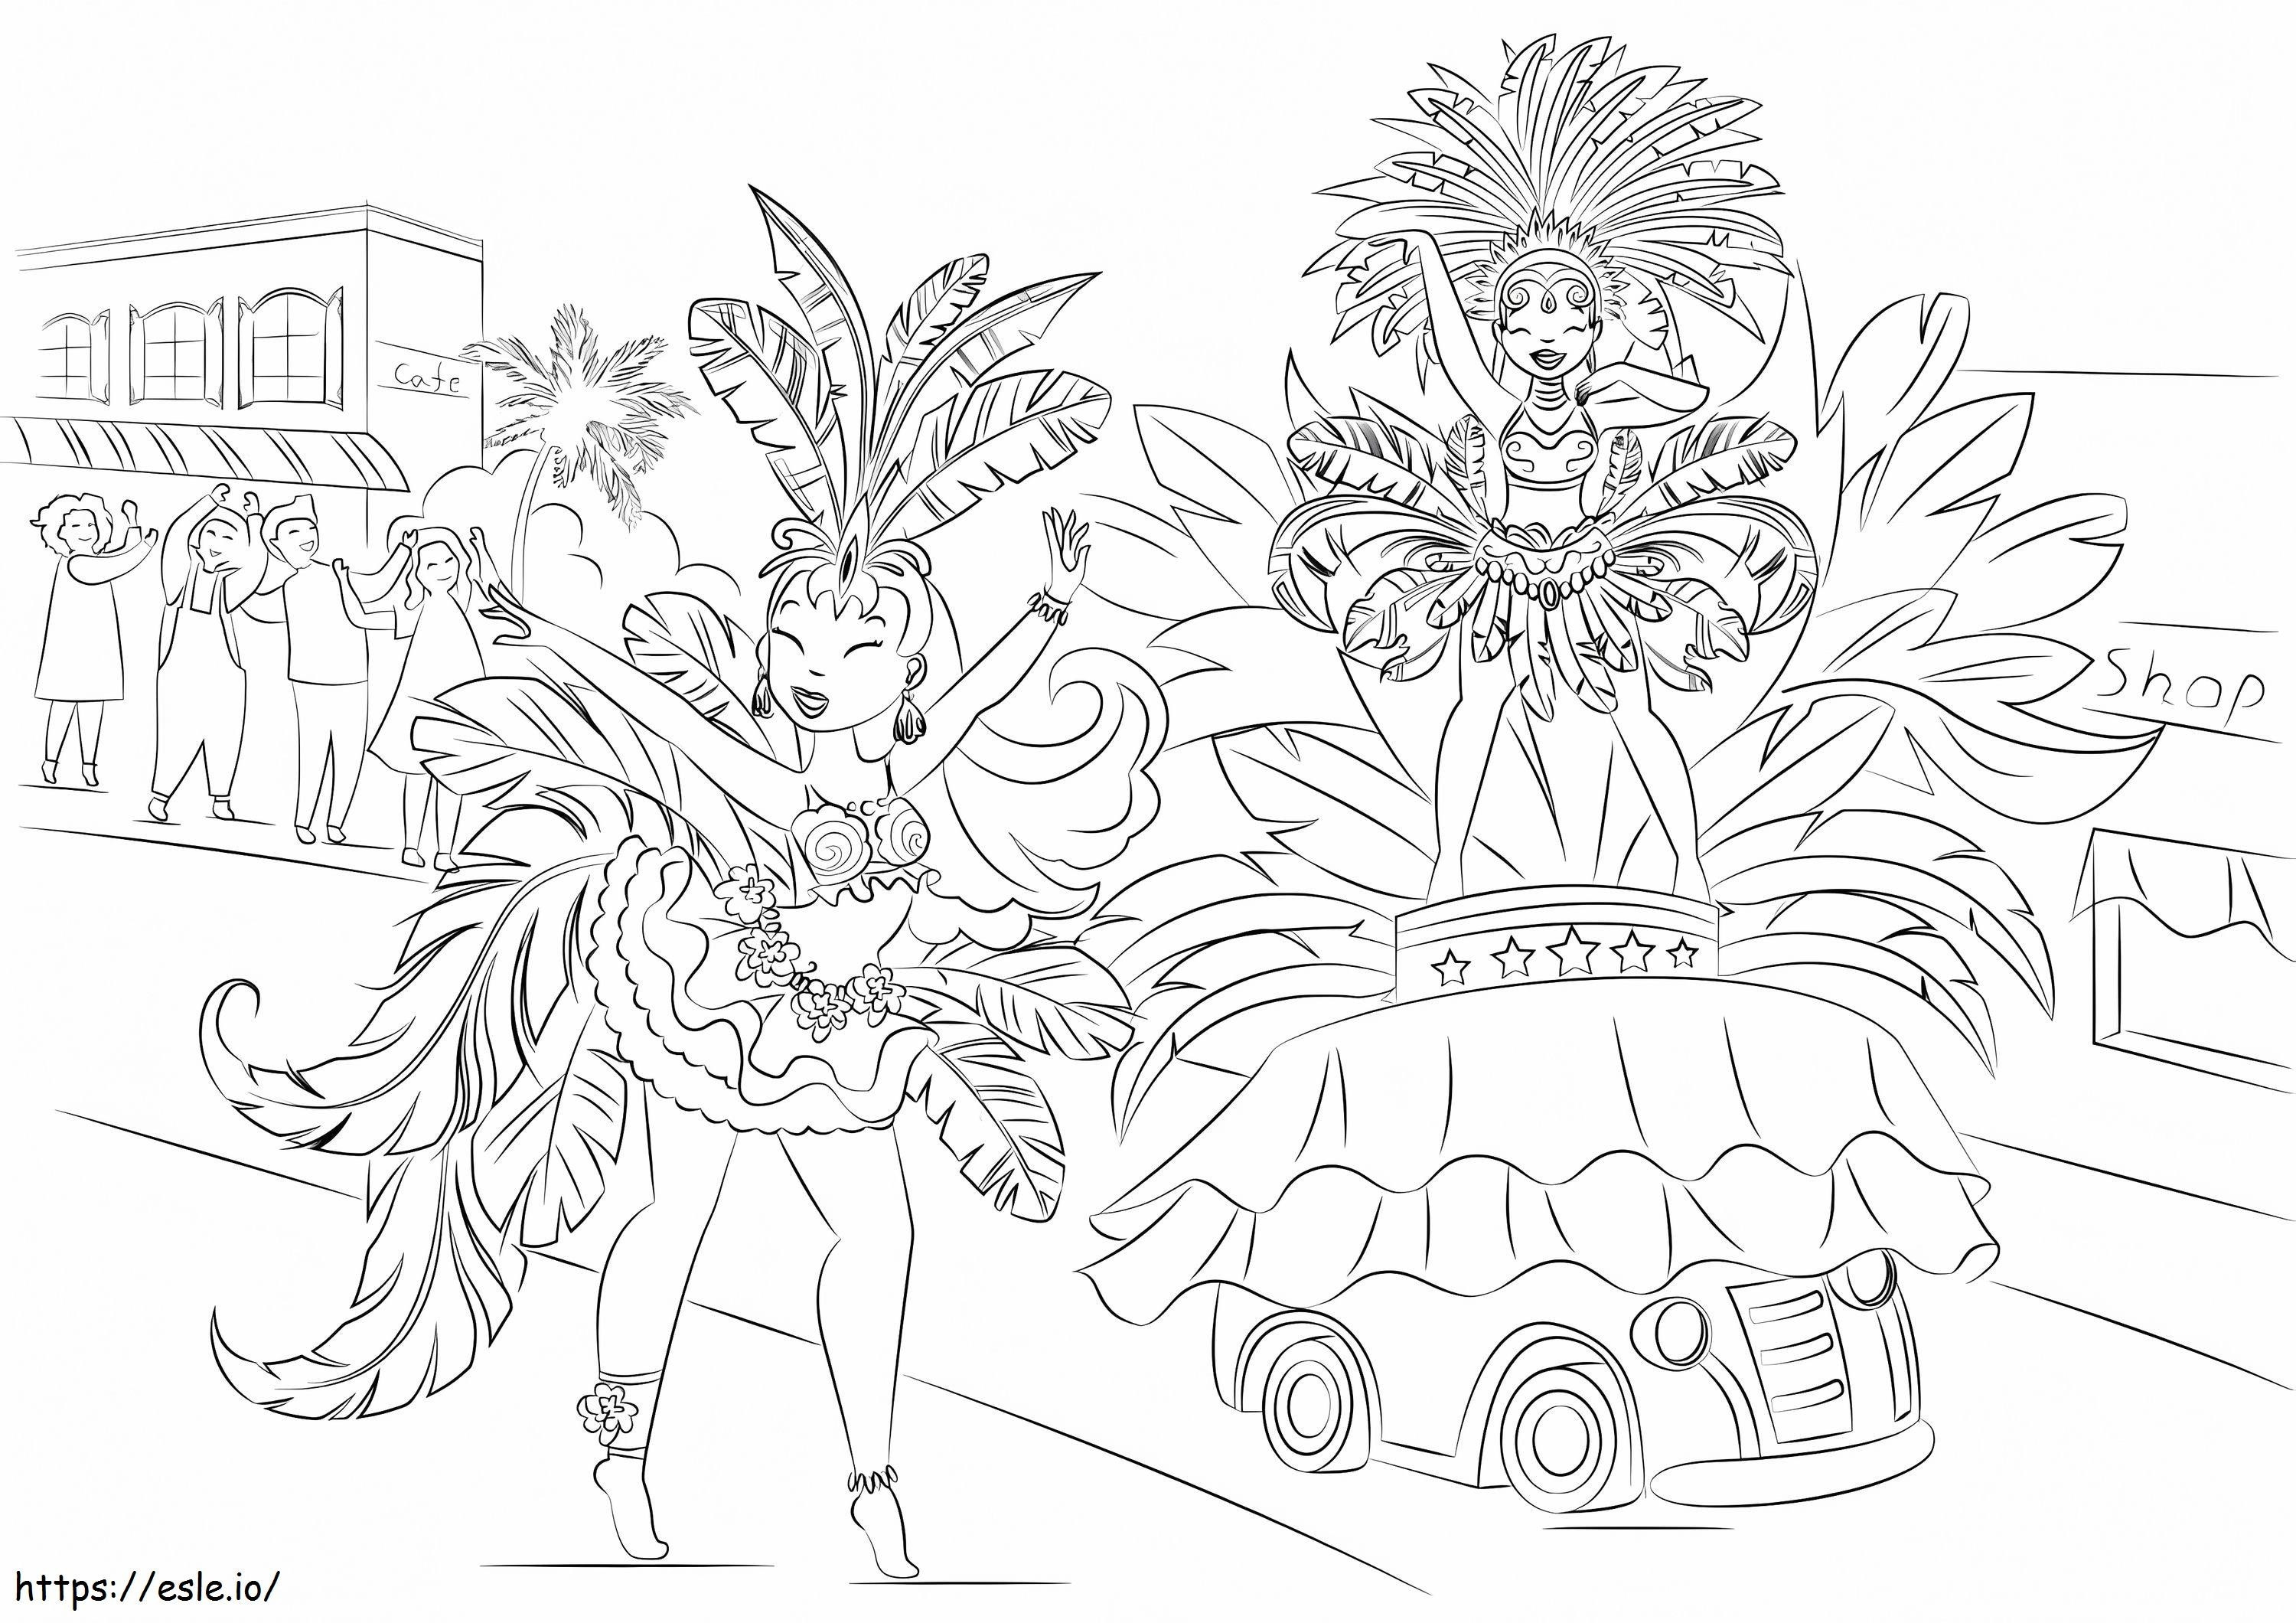 Brazilian Carnival coloring page